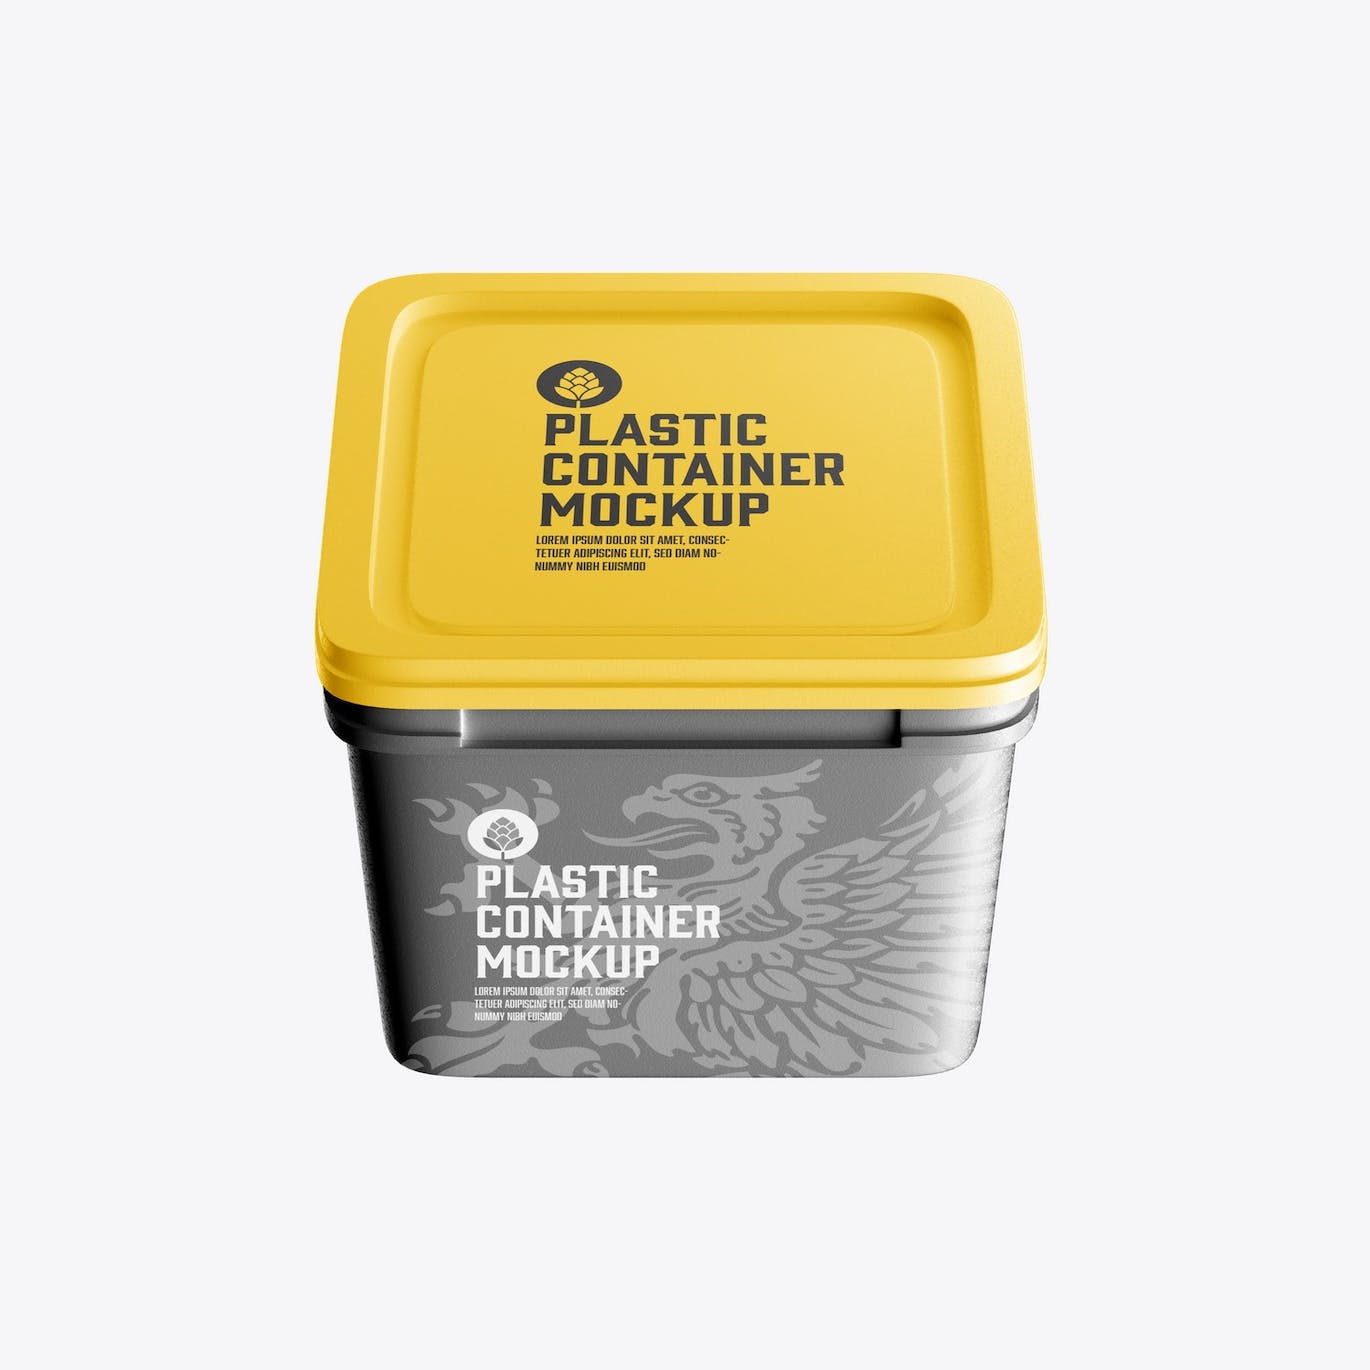 方形塑料容器包装设计样机 Square Plastic Container Mockup 样机素材 第5张